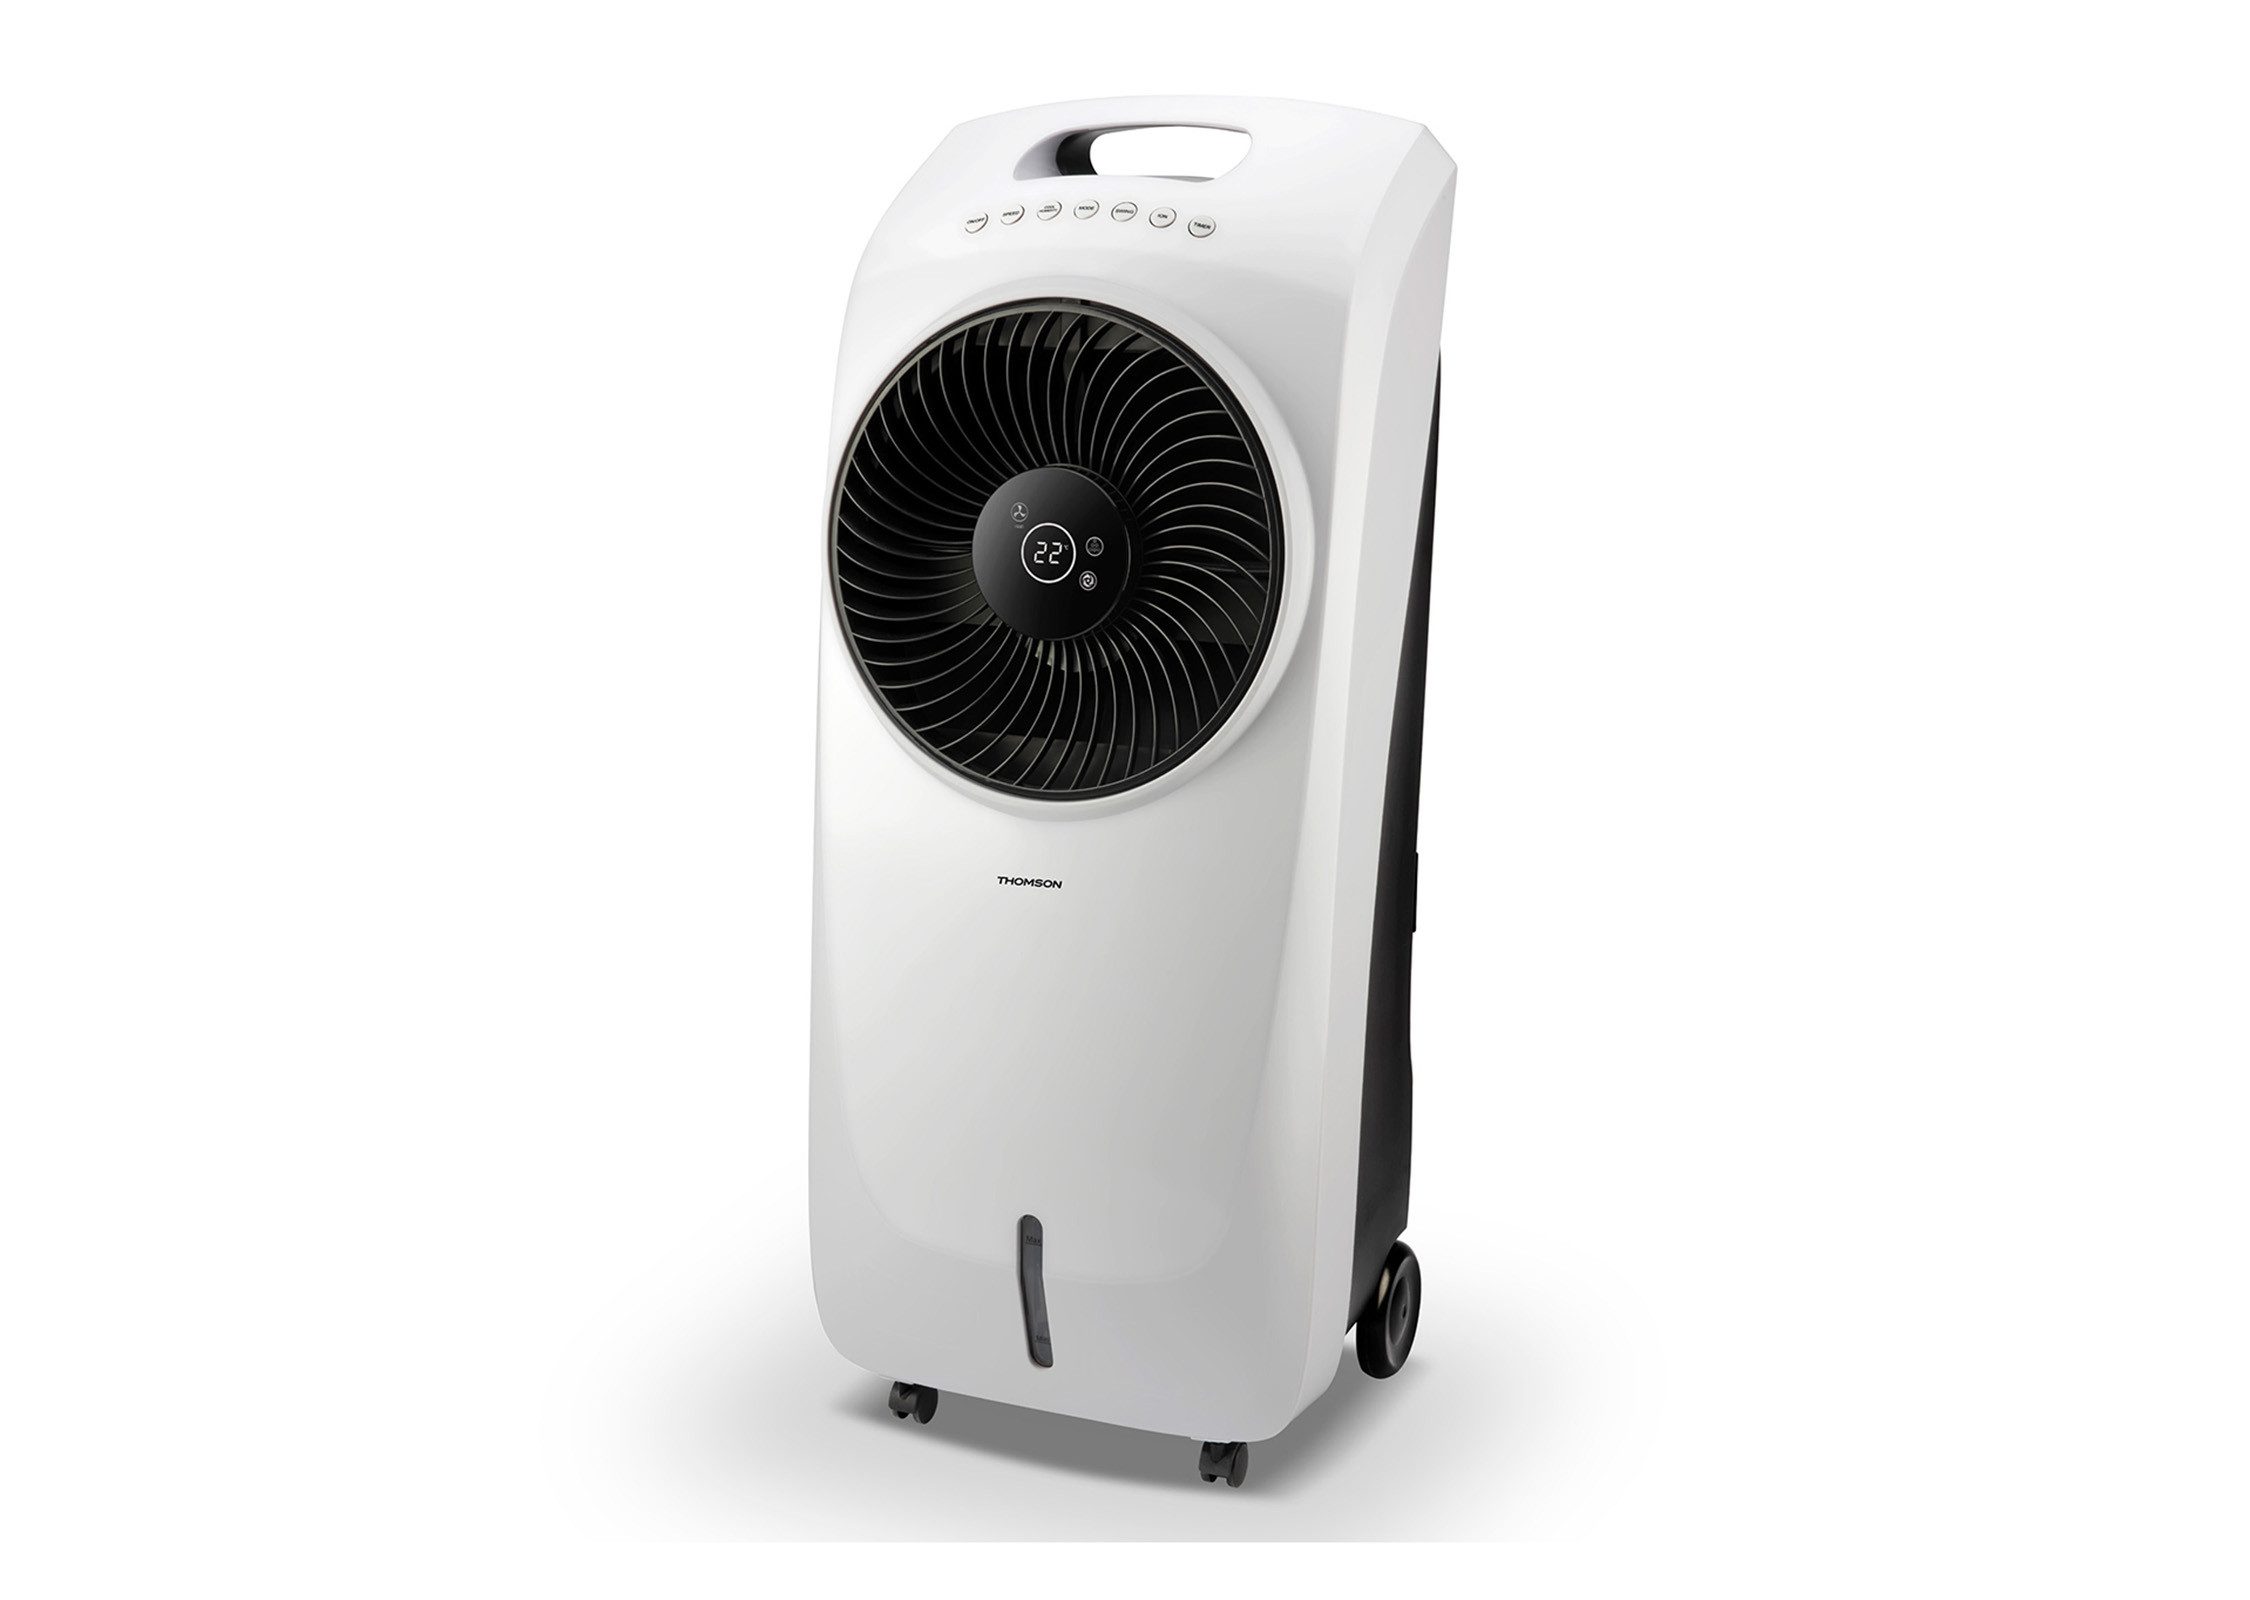 Thomson Turmventilator Evo Electronic 3 in 1, Luftkühler, Ventilator, Luftbefeuchter, 95 Watt